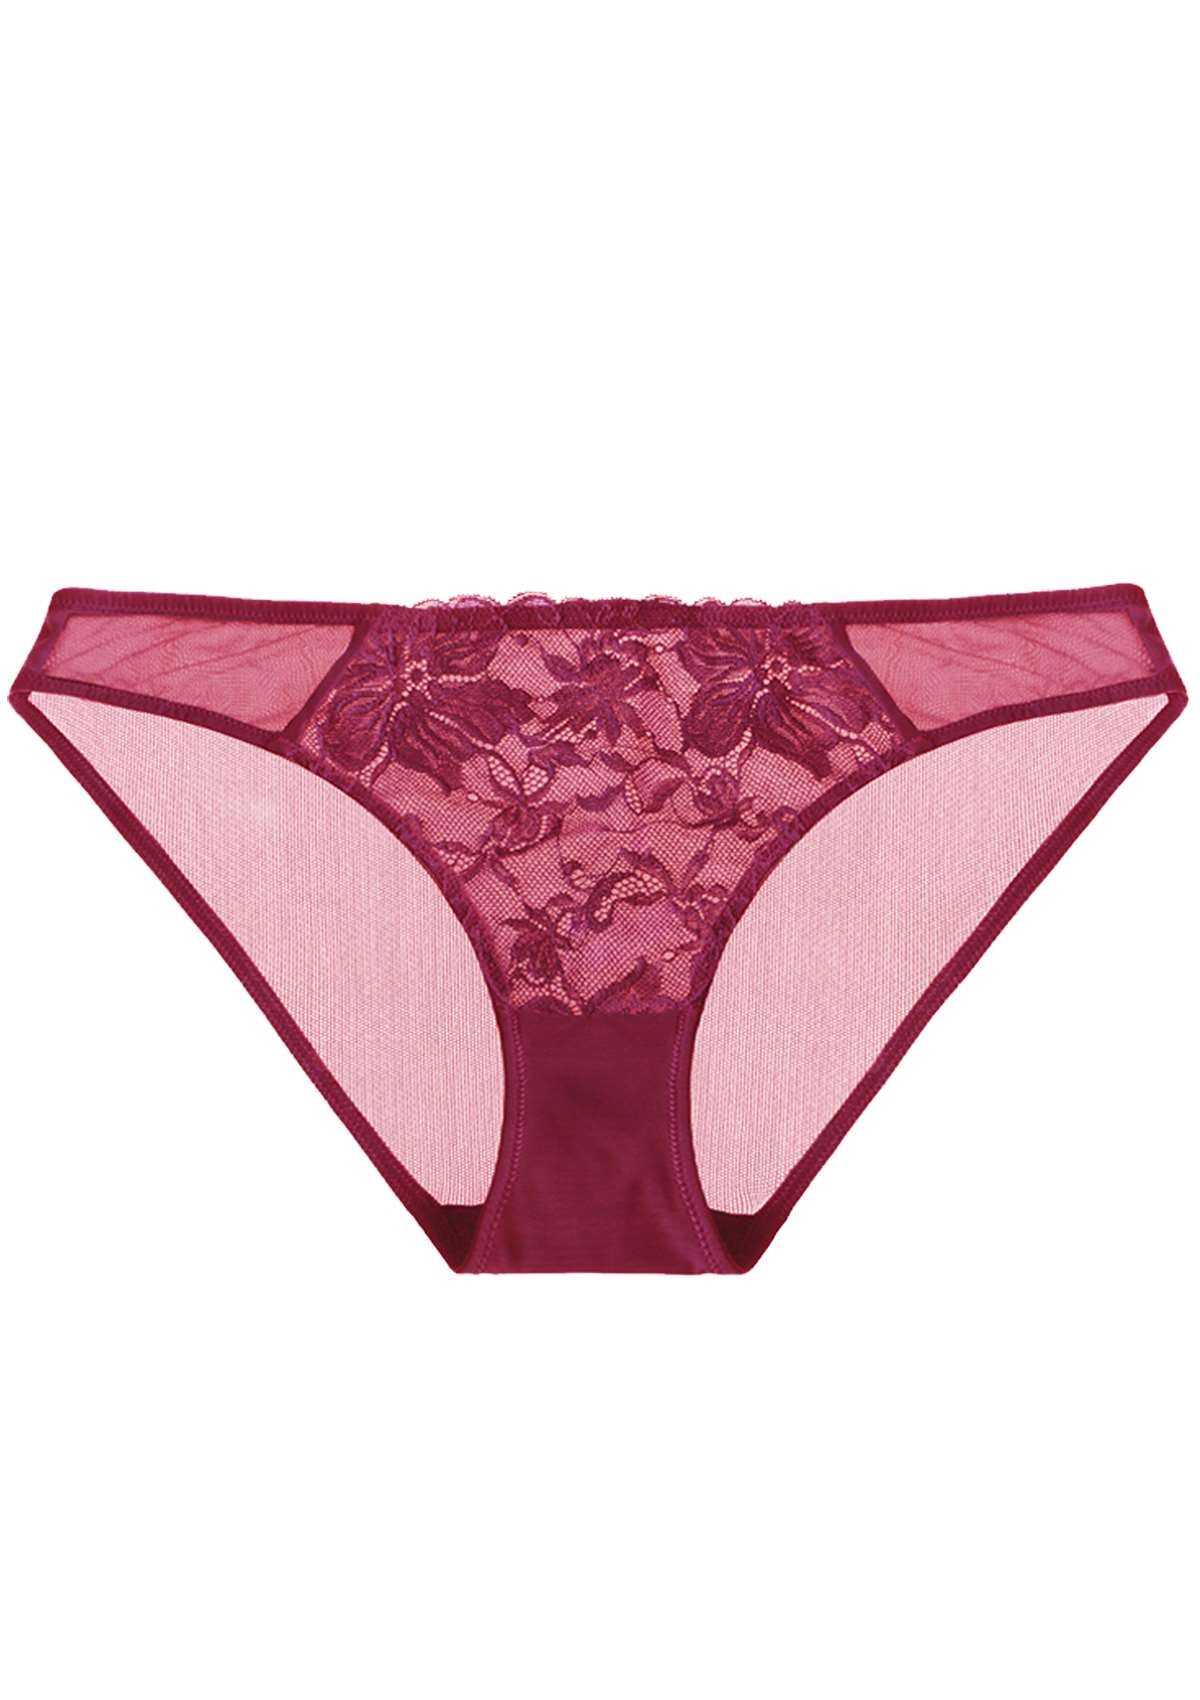 HSIA Breathable Sexy Feminine Lace Mesh Bikini Underwear - XXL / Red